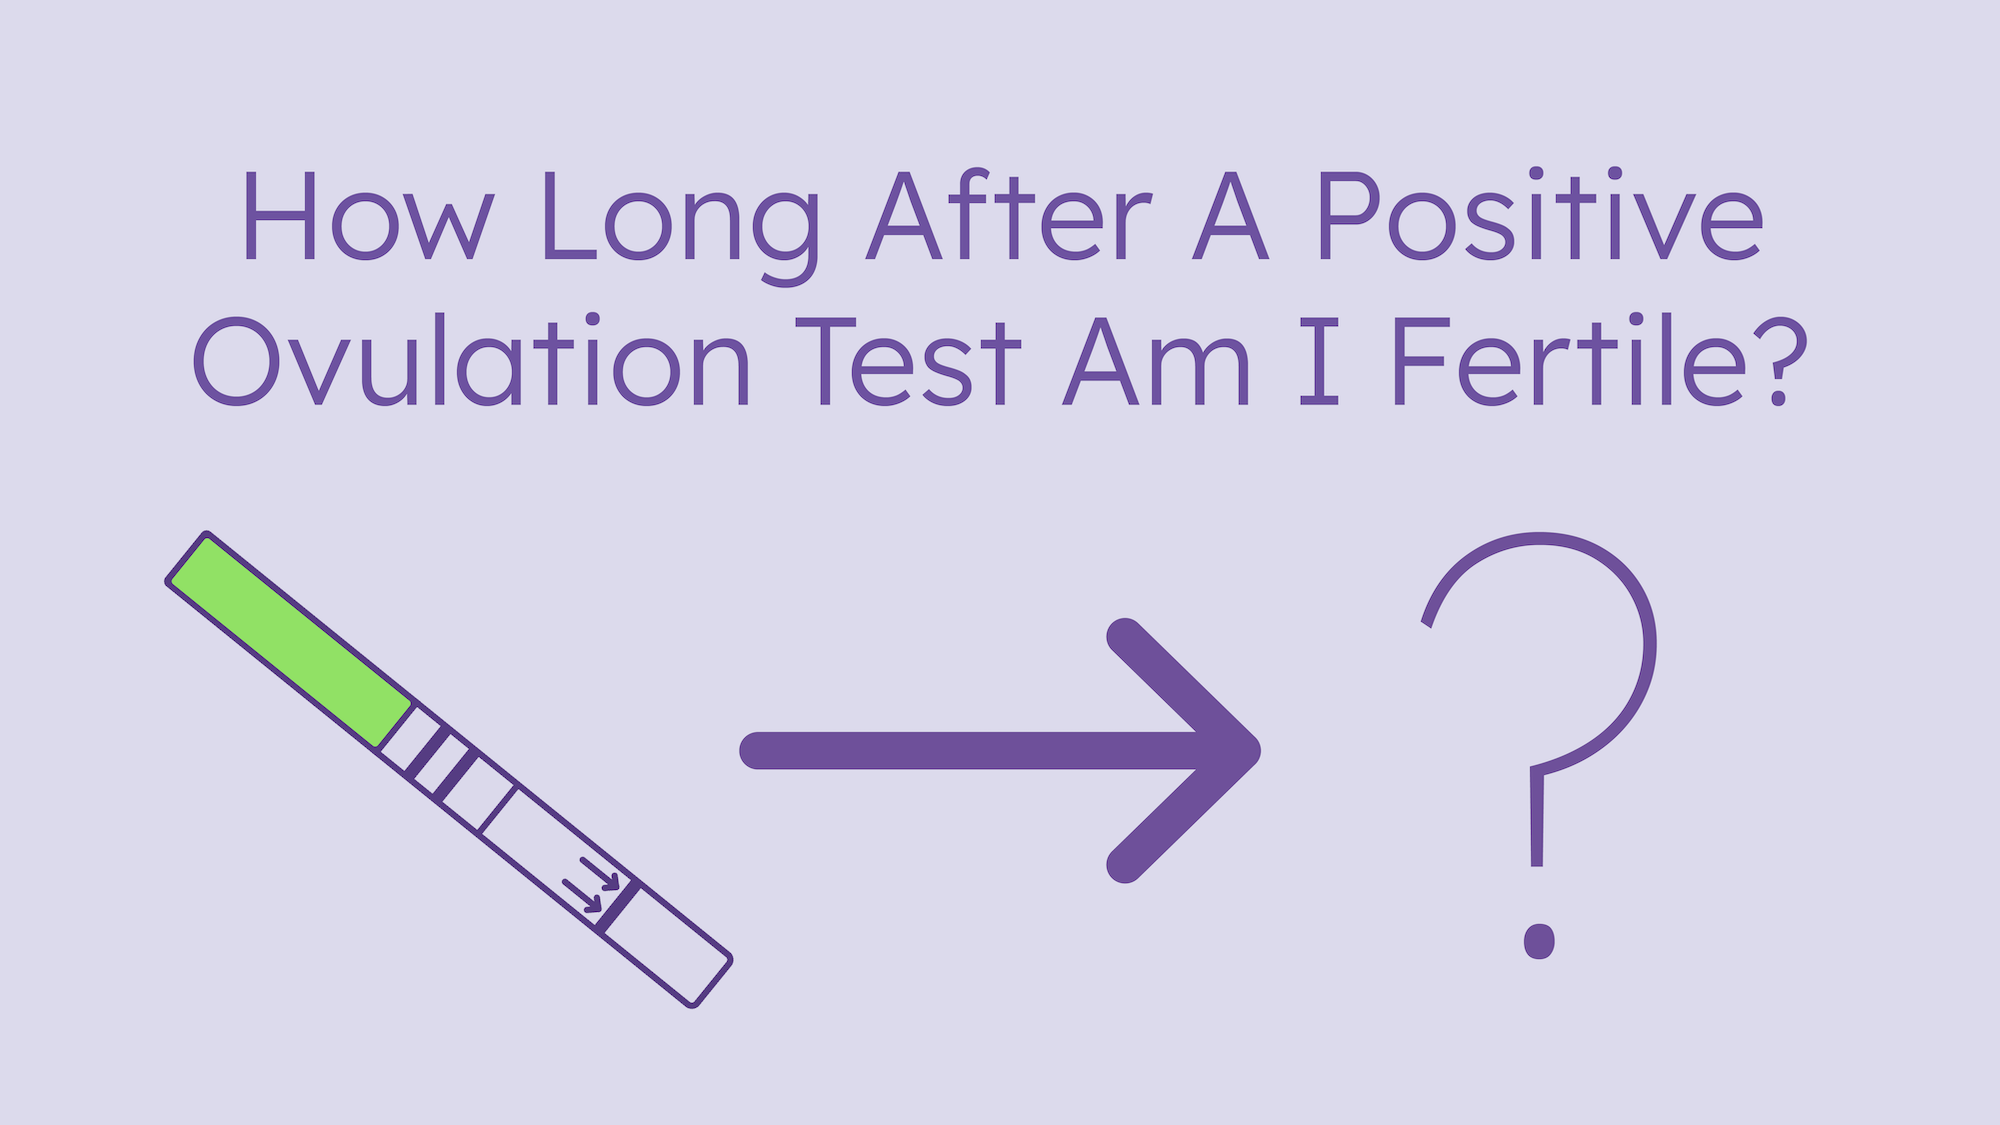 how long after a positive ovulation test am i fertile?